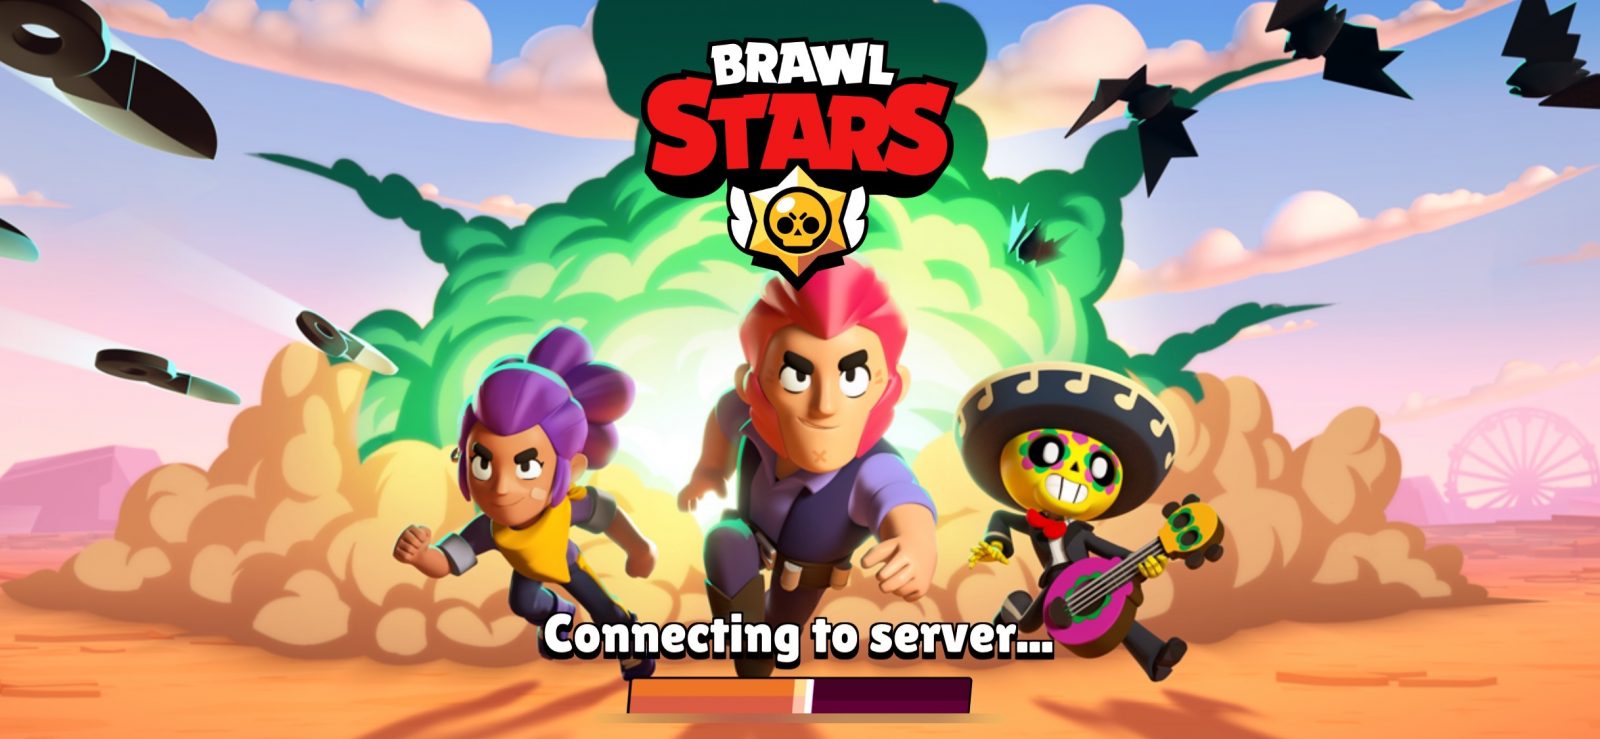 Brawl Stars The Casual App Gamer - brawl stars joystick 2021